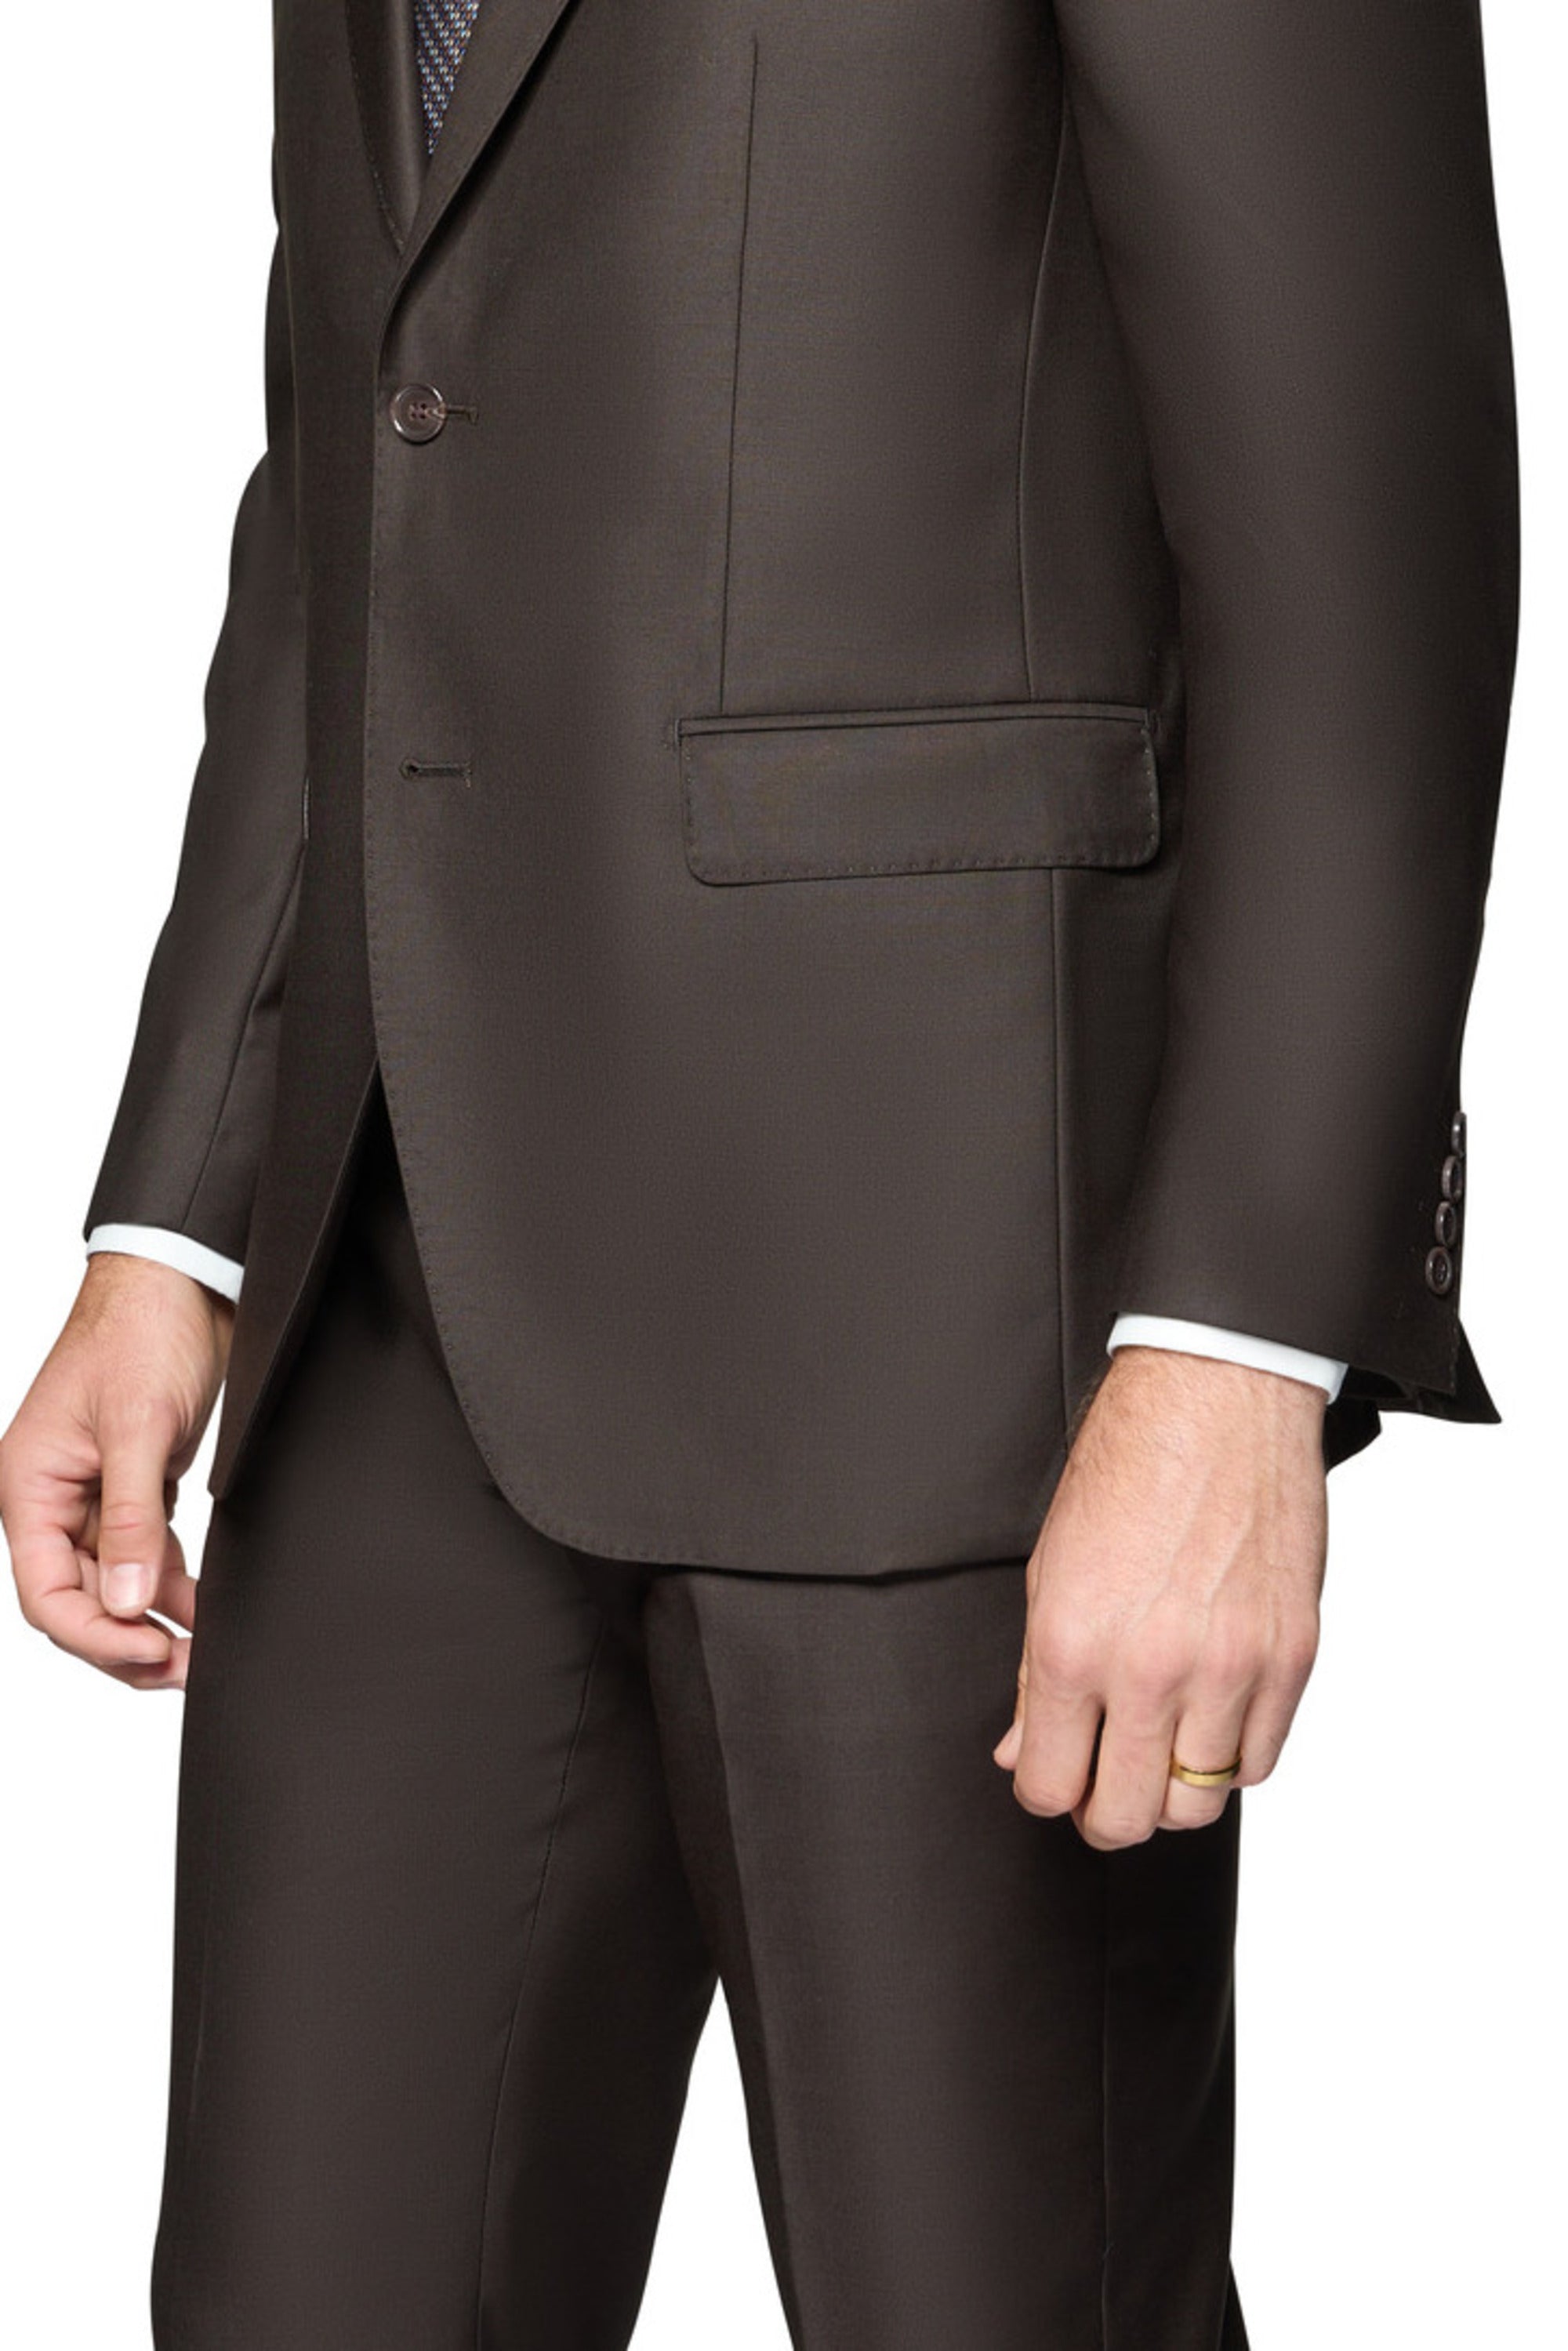 Berragamo Elegant - Faille Wool Solid Suit Modern - Dark Brown